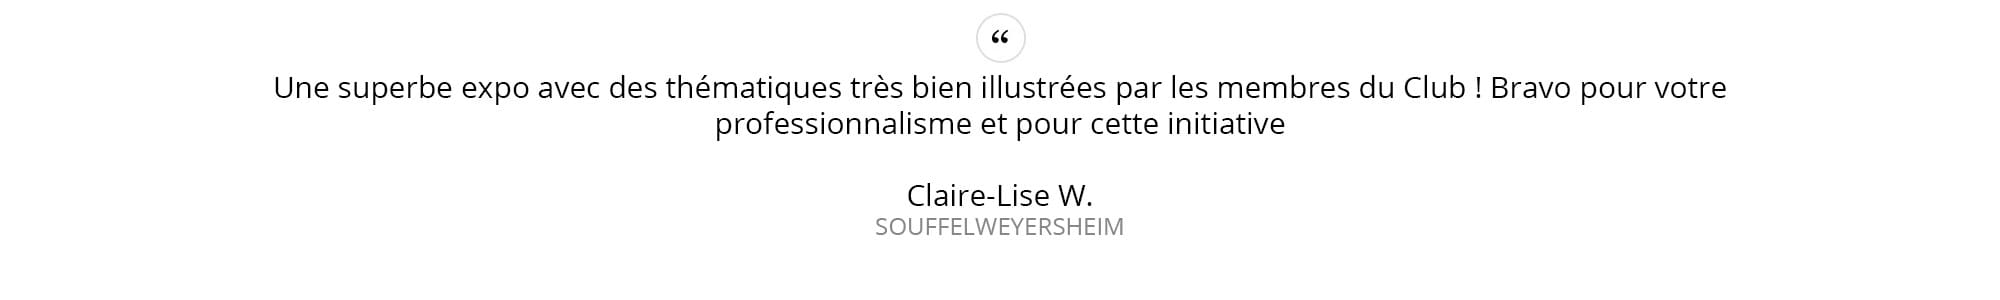 Claire-Lise-W.---SOUFFELWEYERSHEIM